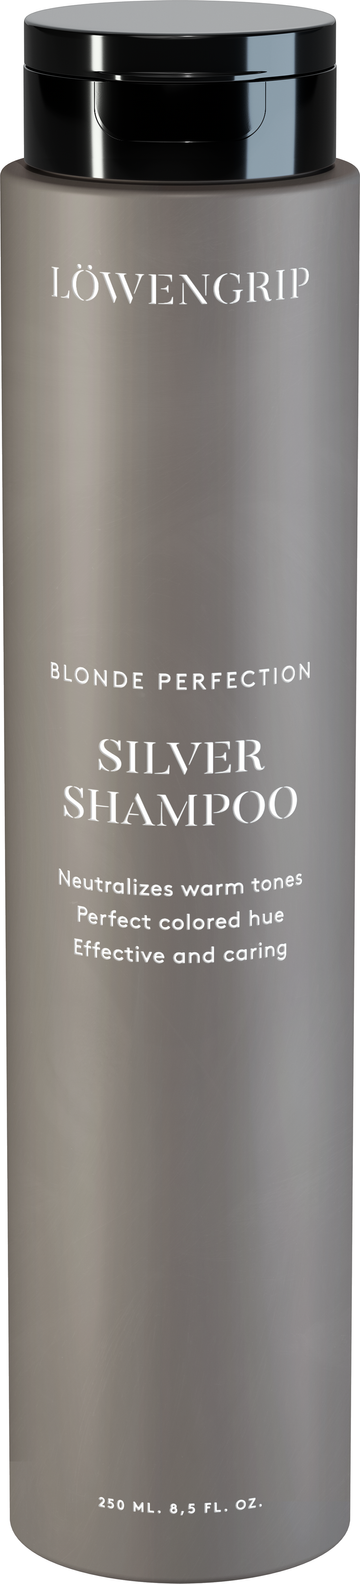 Löwengrip Blonde Perfection silver shampoo 